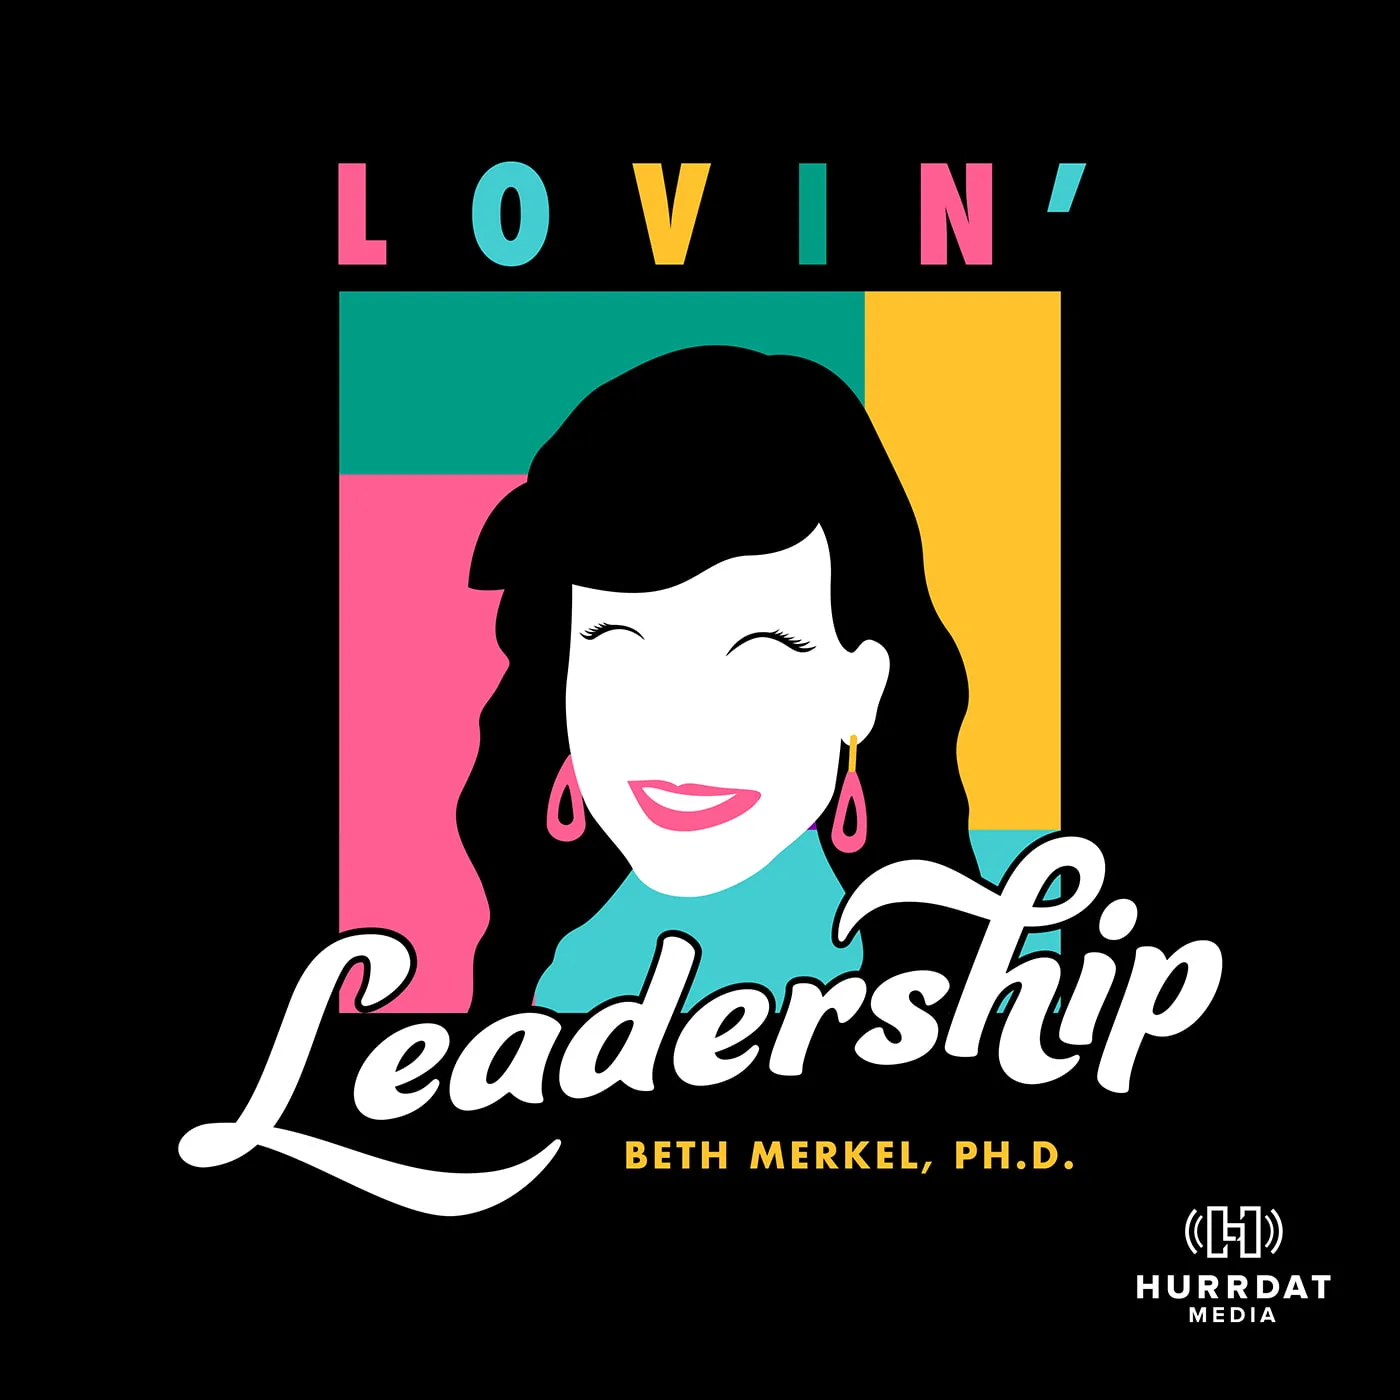 Lovin' Leadership